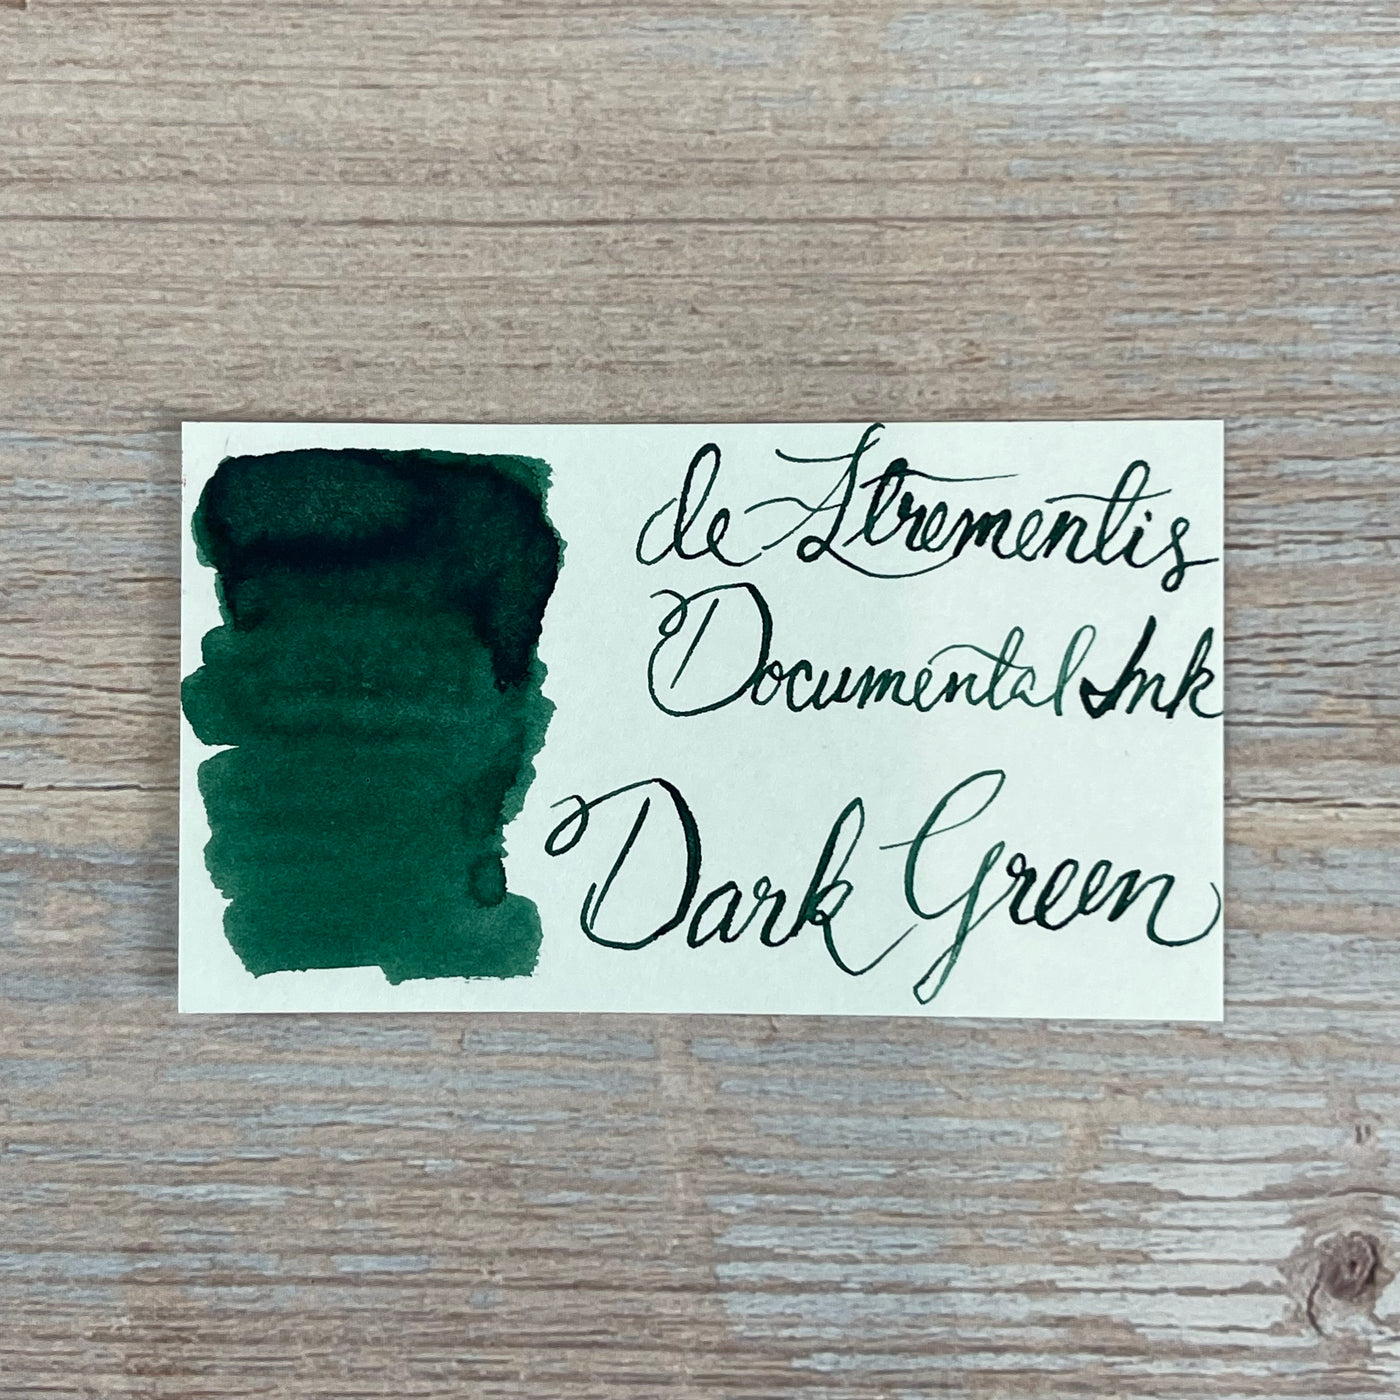 De Atramentis Document Ink Dark Green - 45ml Bottled ink